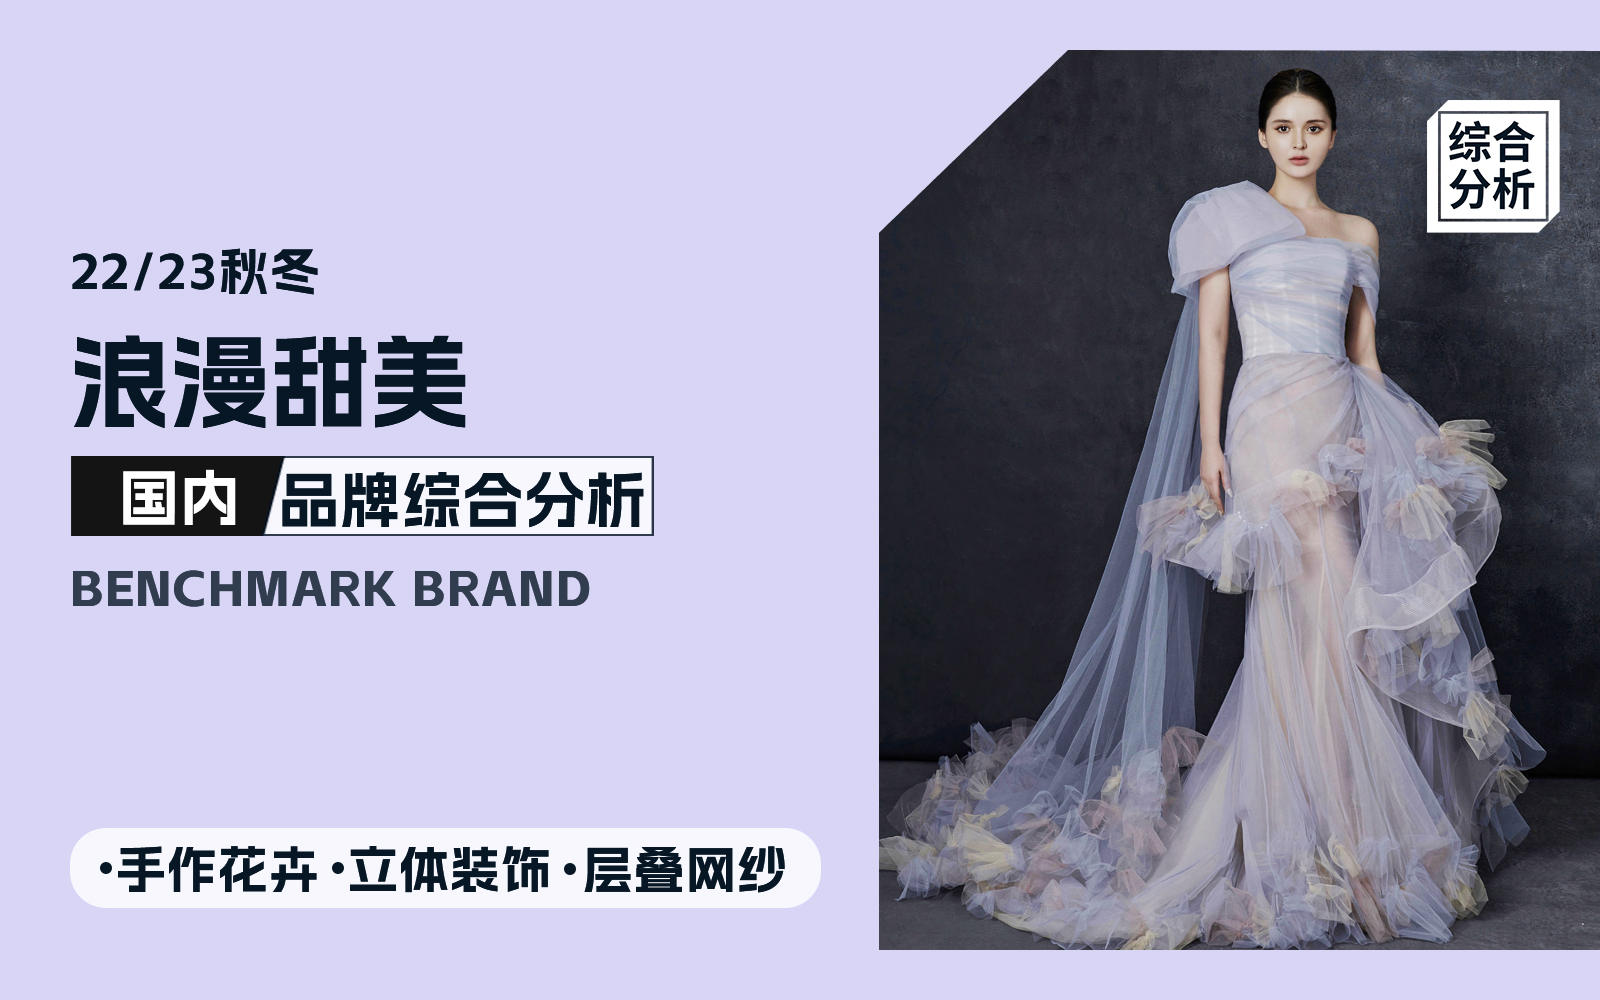 Romantic & Sweet -- The Comprehensive Analysis of Chinese Wedding Dress Brand